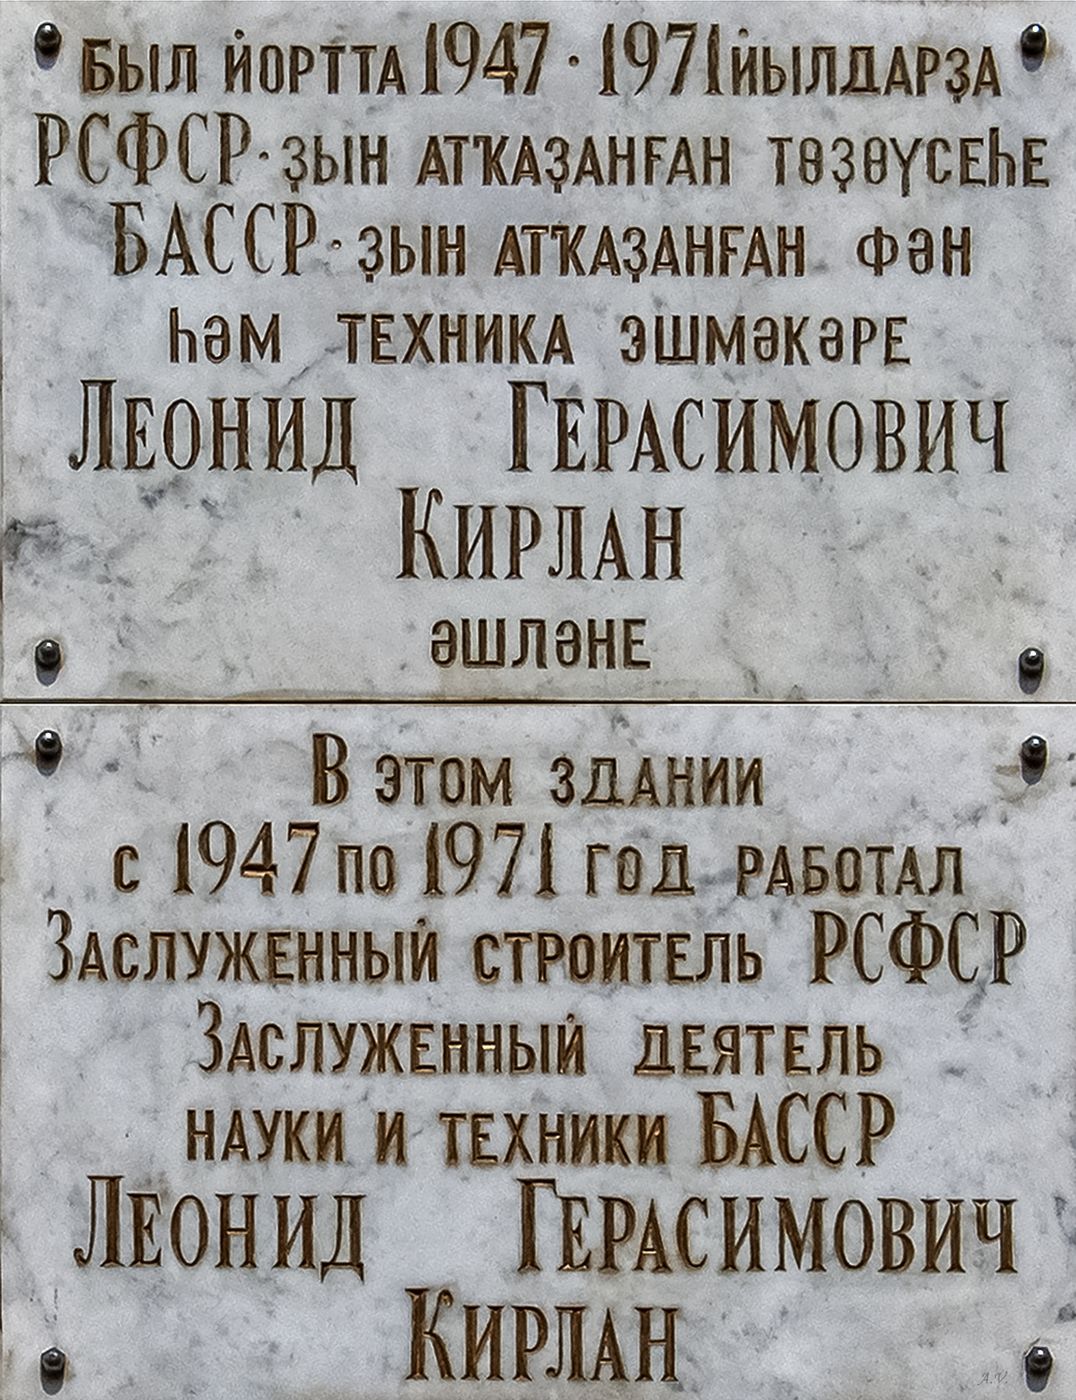 Ufa, Улица Максима Горького, 71. Ufa — Memorial plaques